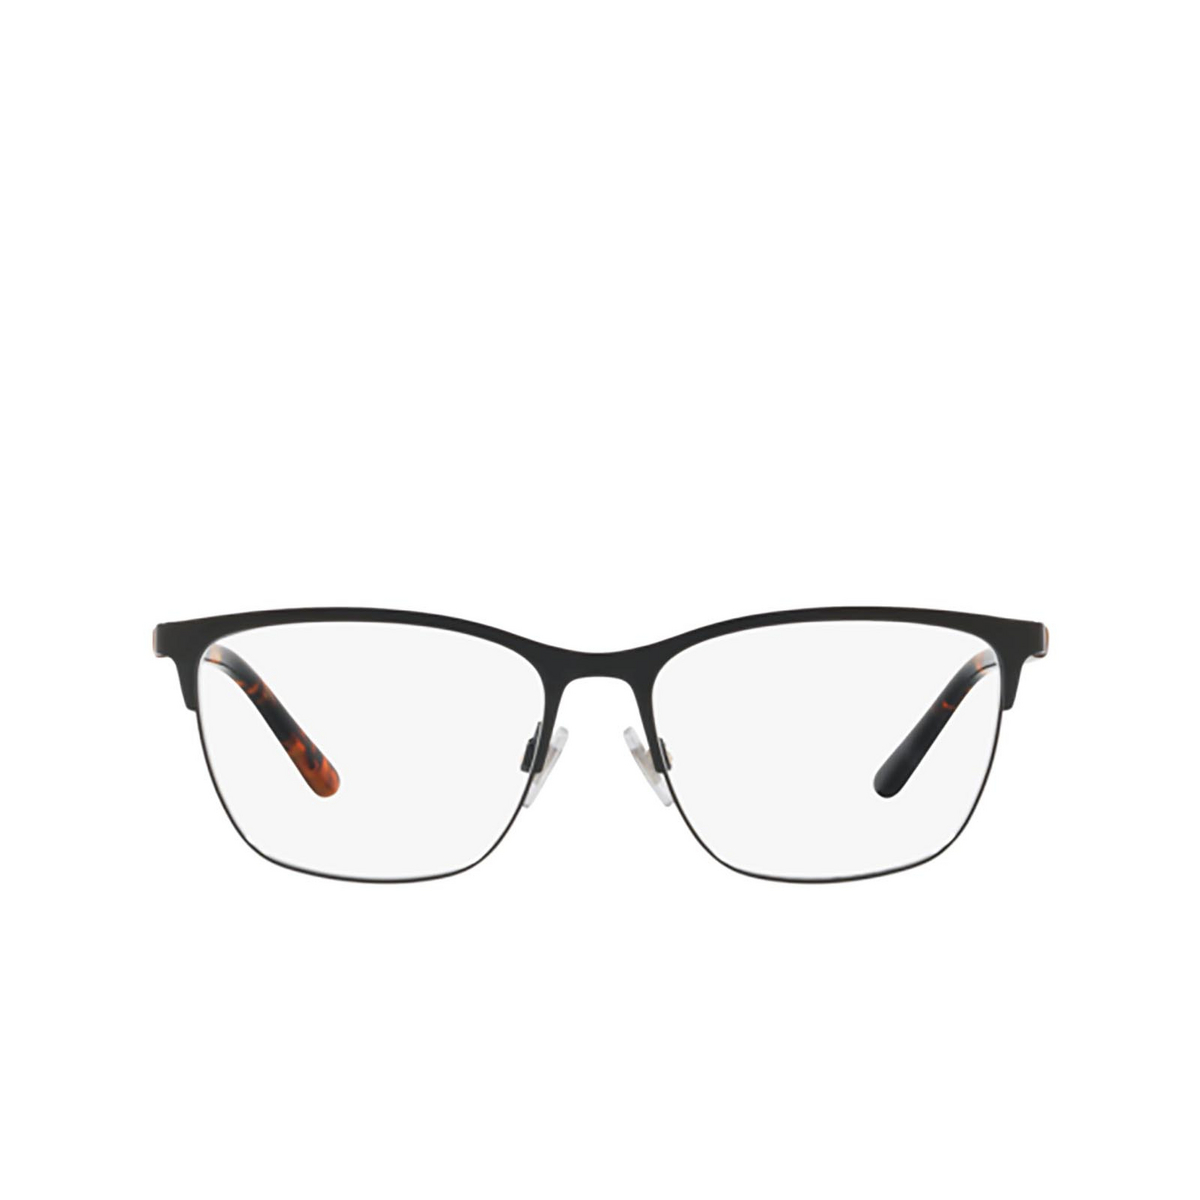 Polo Ralph Lauren® Square Eyeglasses: PH1184 color Shiny Black 9003 - front view.